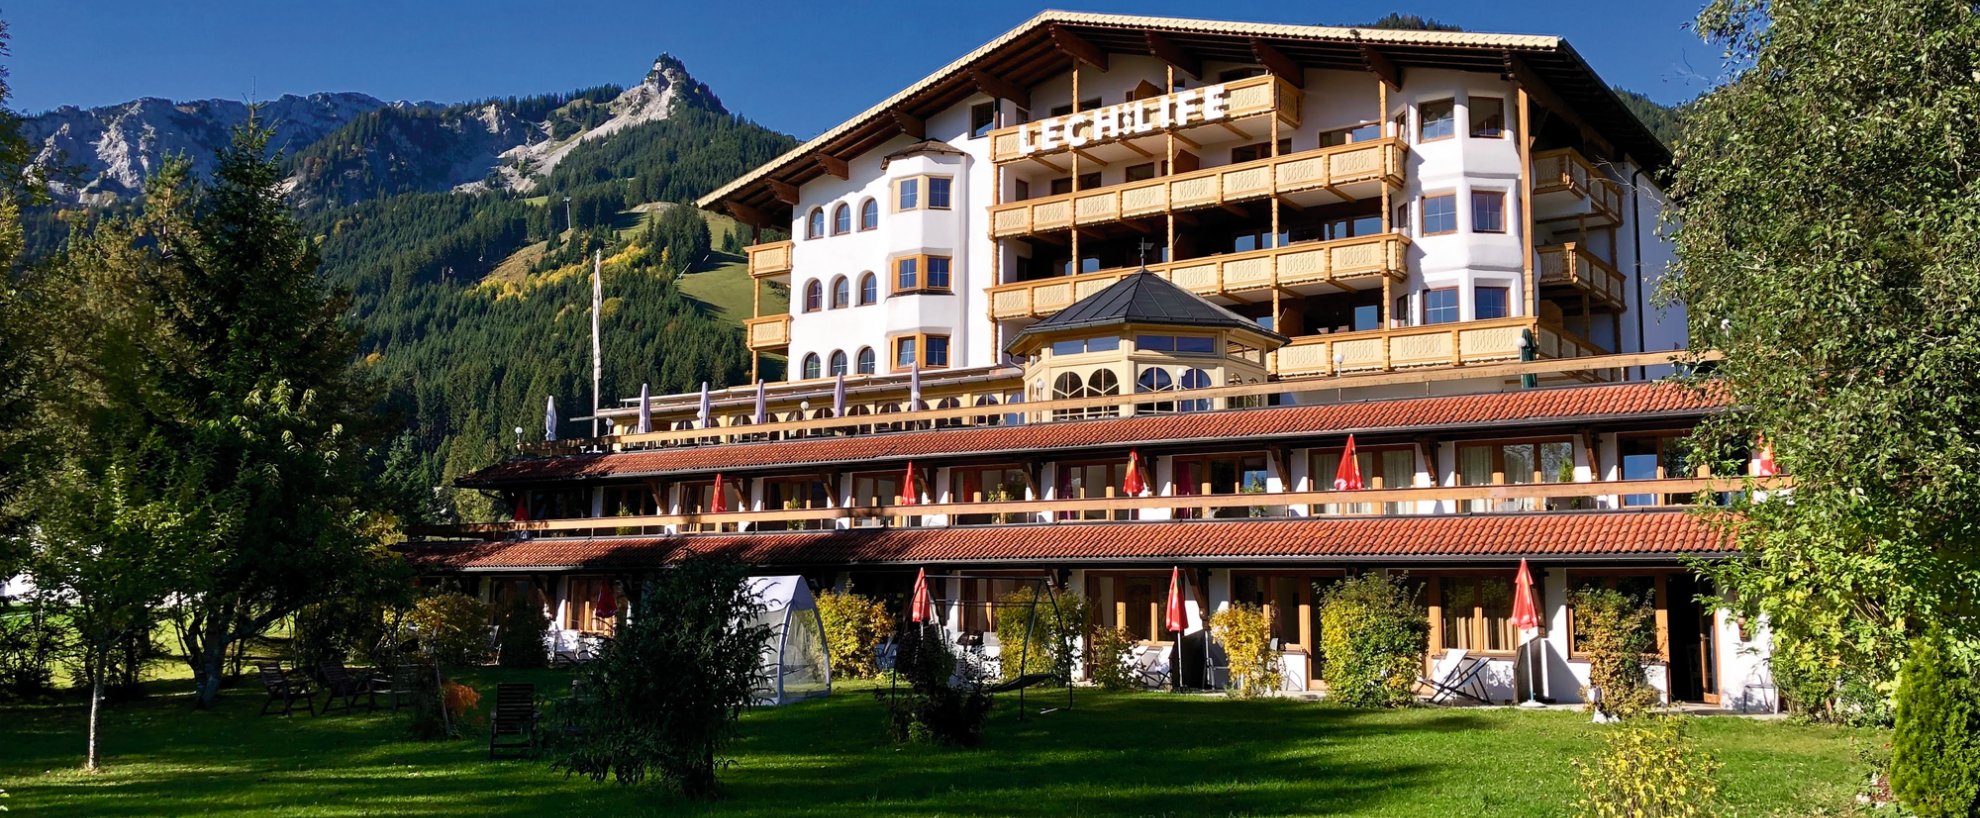 Naturhotel Lechlife Tirol Yoga Reisen Wandern Hotel 